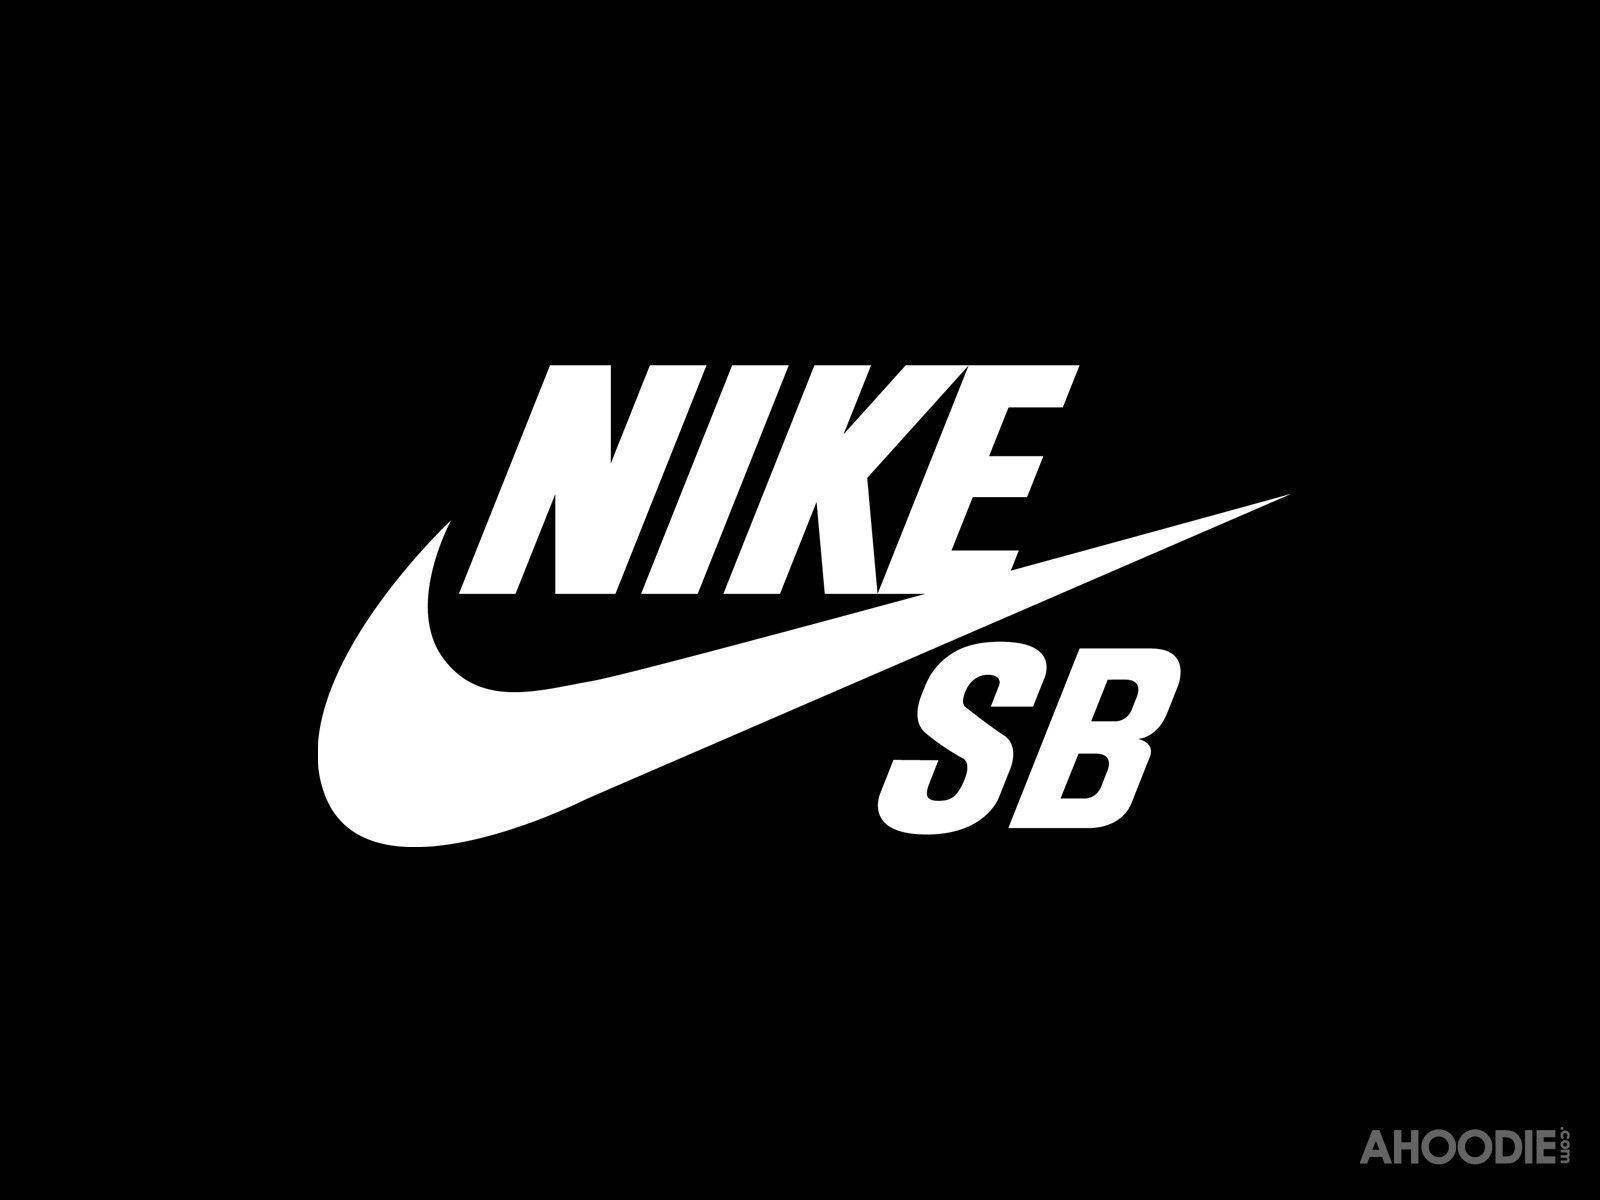 Cool Nike Sb Wallpaper